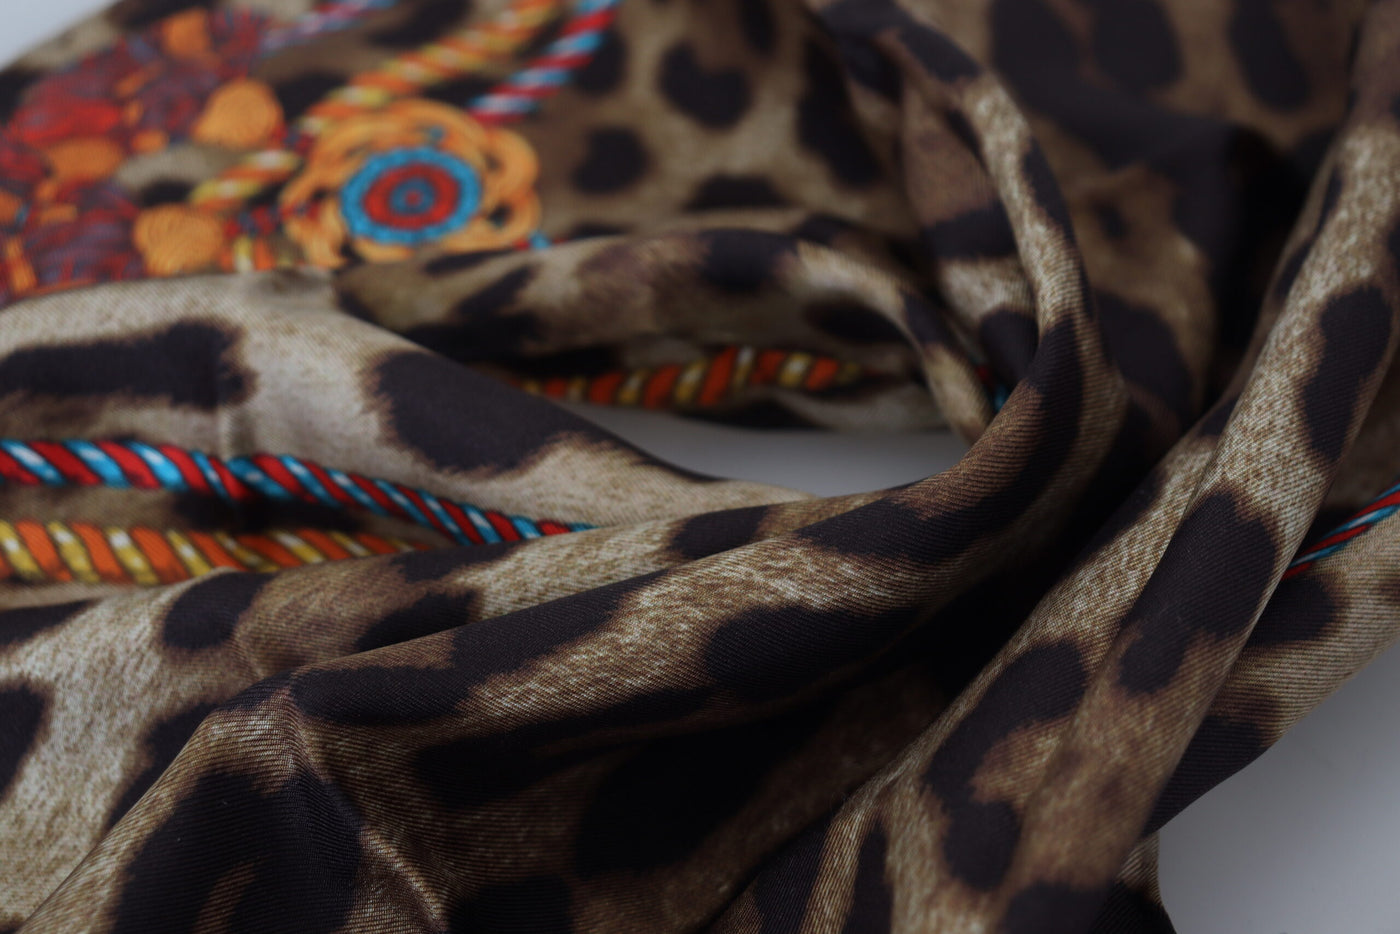 Brown Leopard Silk Square Wrap Foulard Scarf